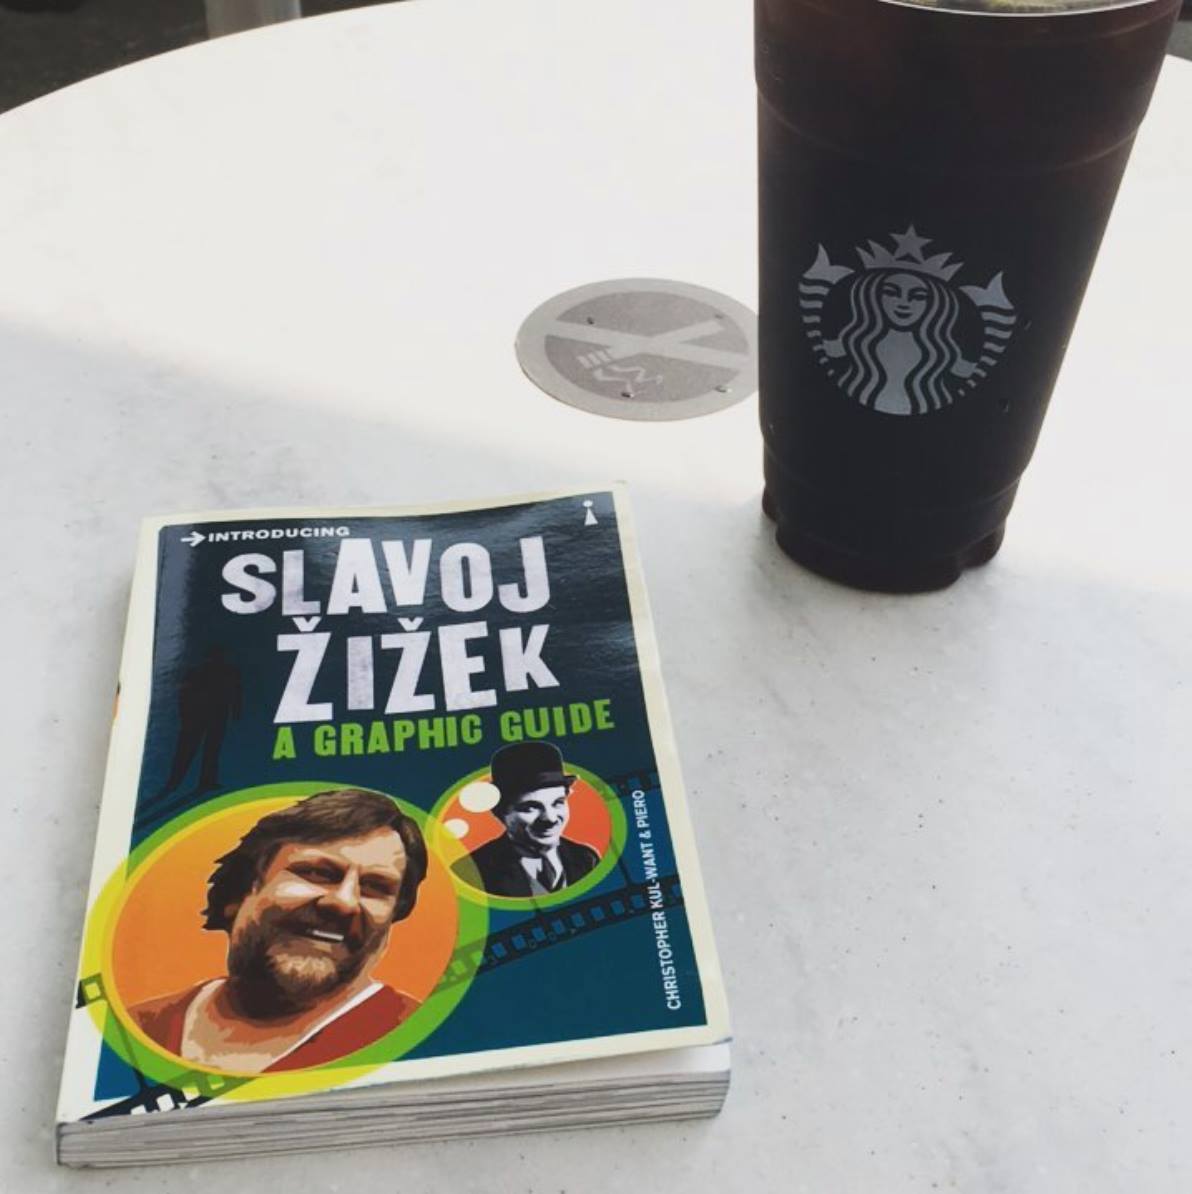 Slavoj-zizek-a-graphic-guide.jpg